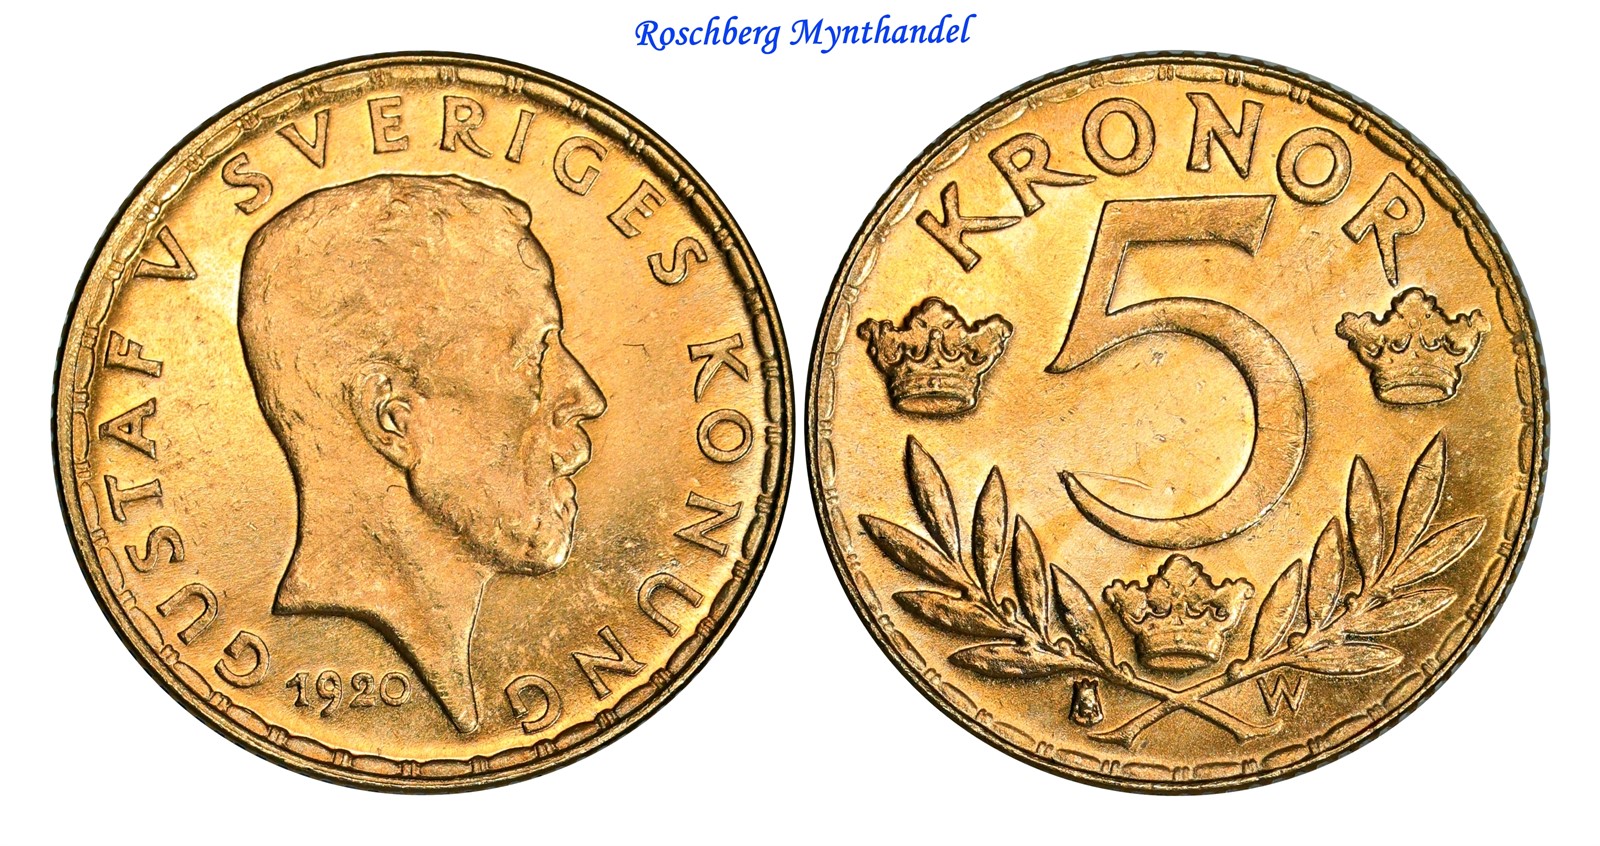 SWEDEN. 5 Kronor 1920 UNC